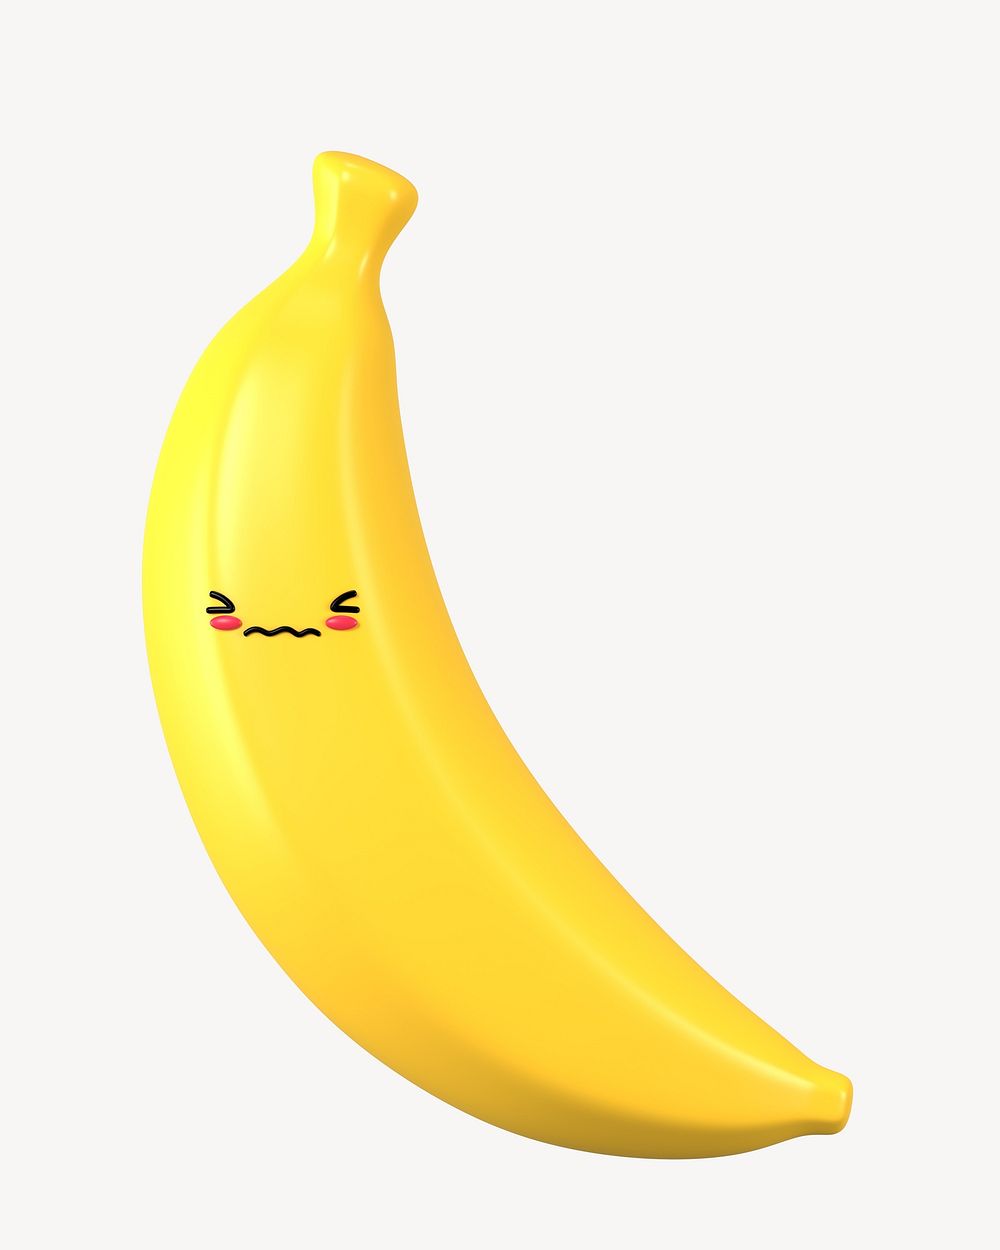 3D blushing face banana, emoticon illustration